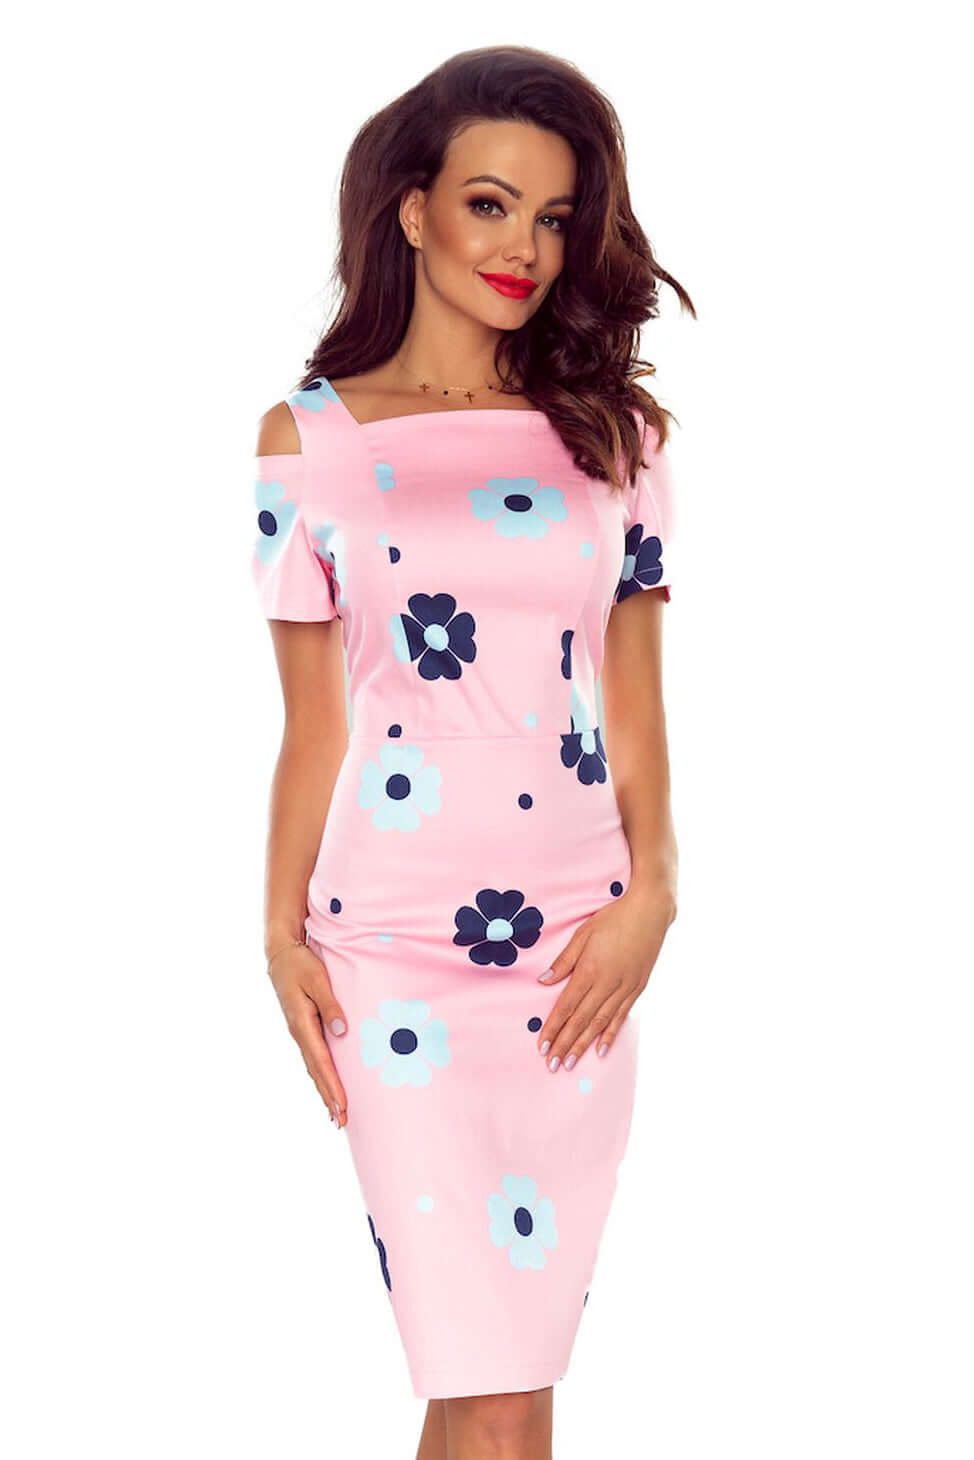 Bergamo 440-4 Elegant dress with short sleeves - pink with flowers | Shangri-La Fashion